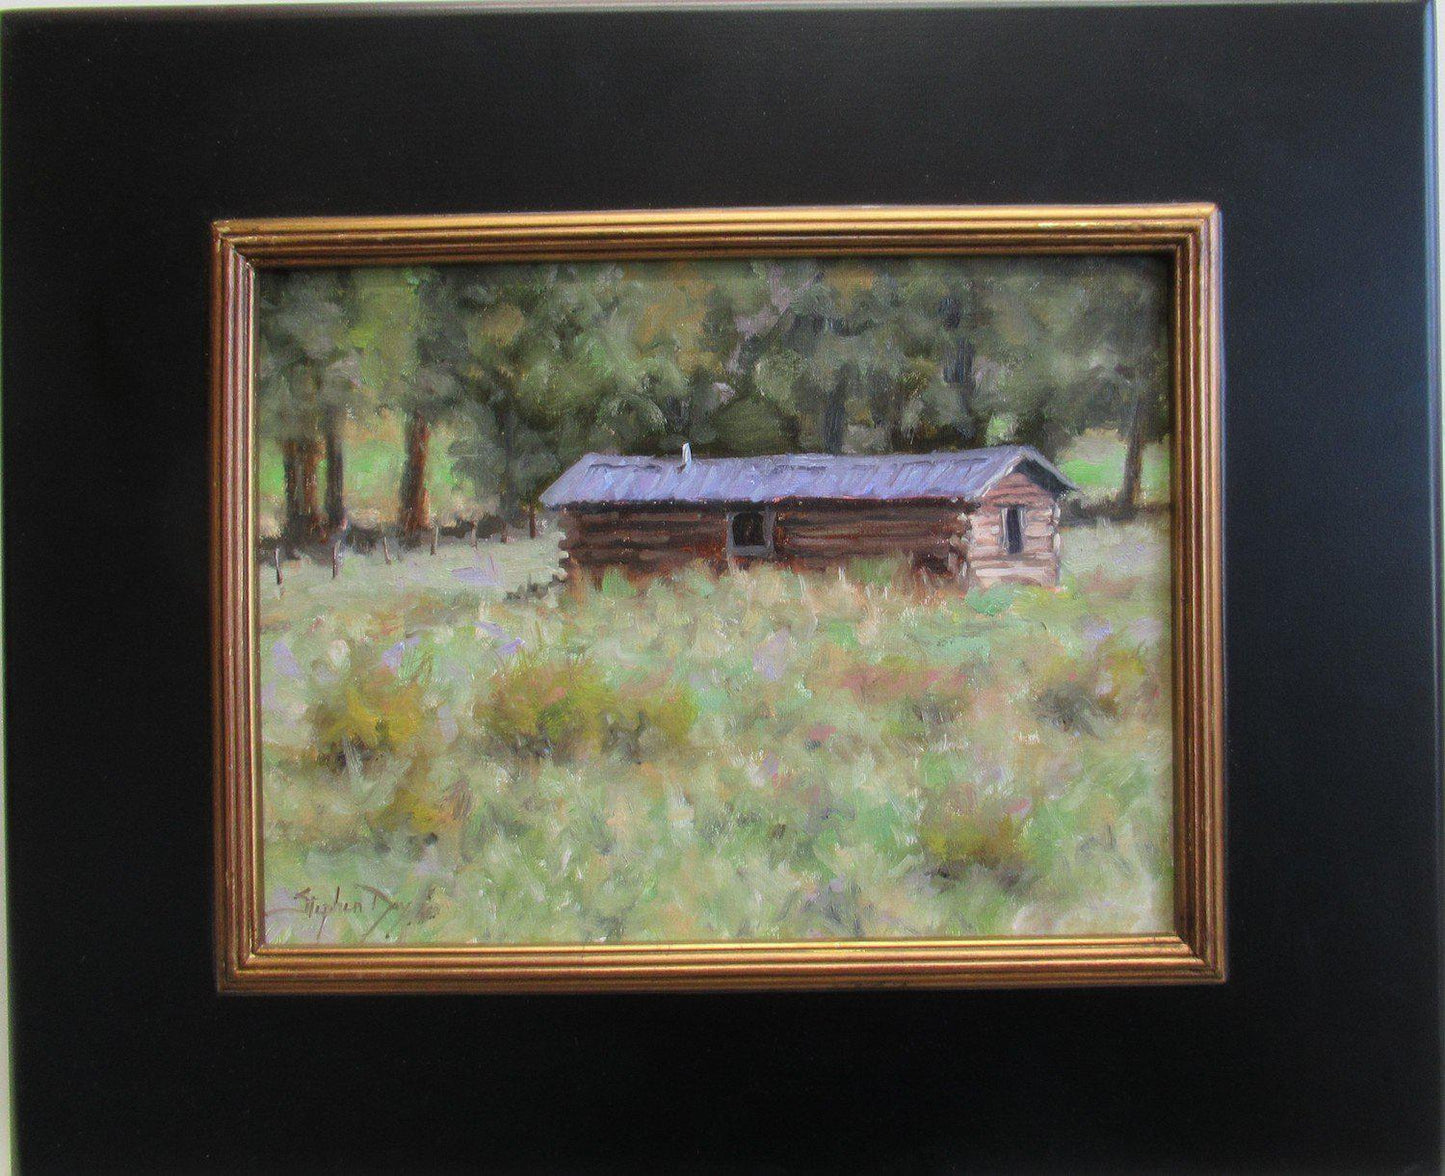 Homesteader’s Cabin-Painting-Stephen Day-Sorrel Sky Gallery